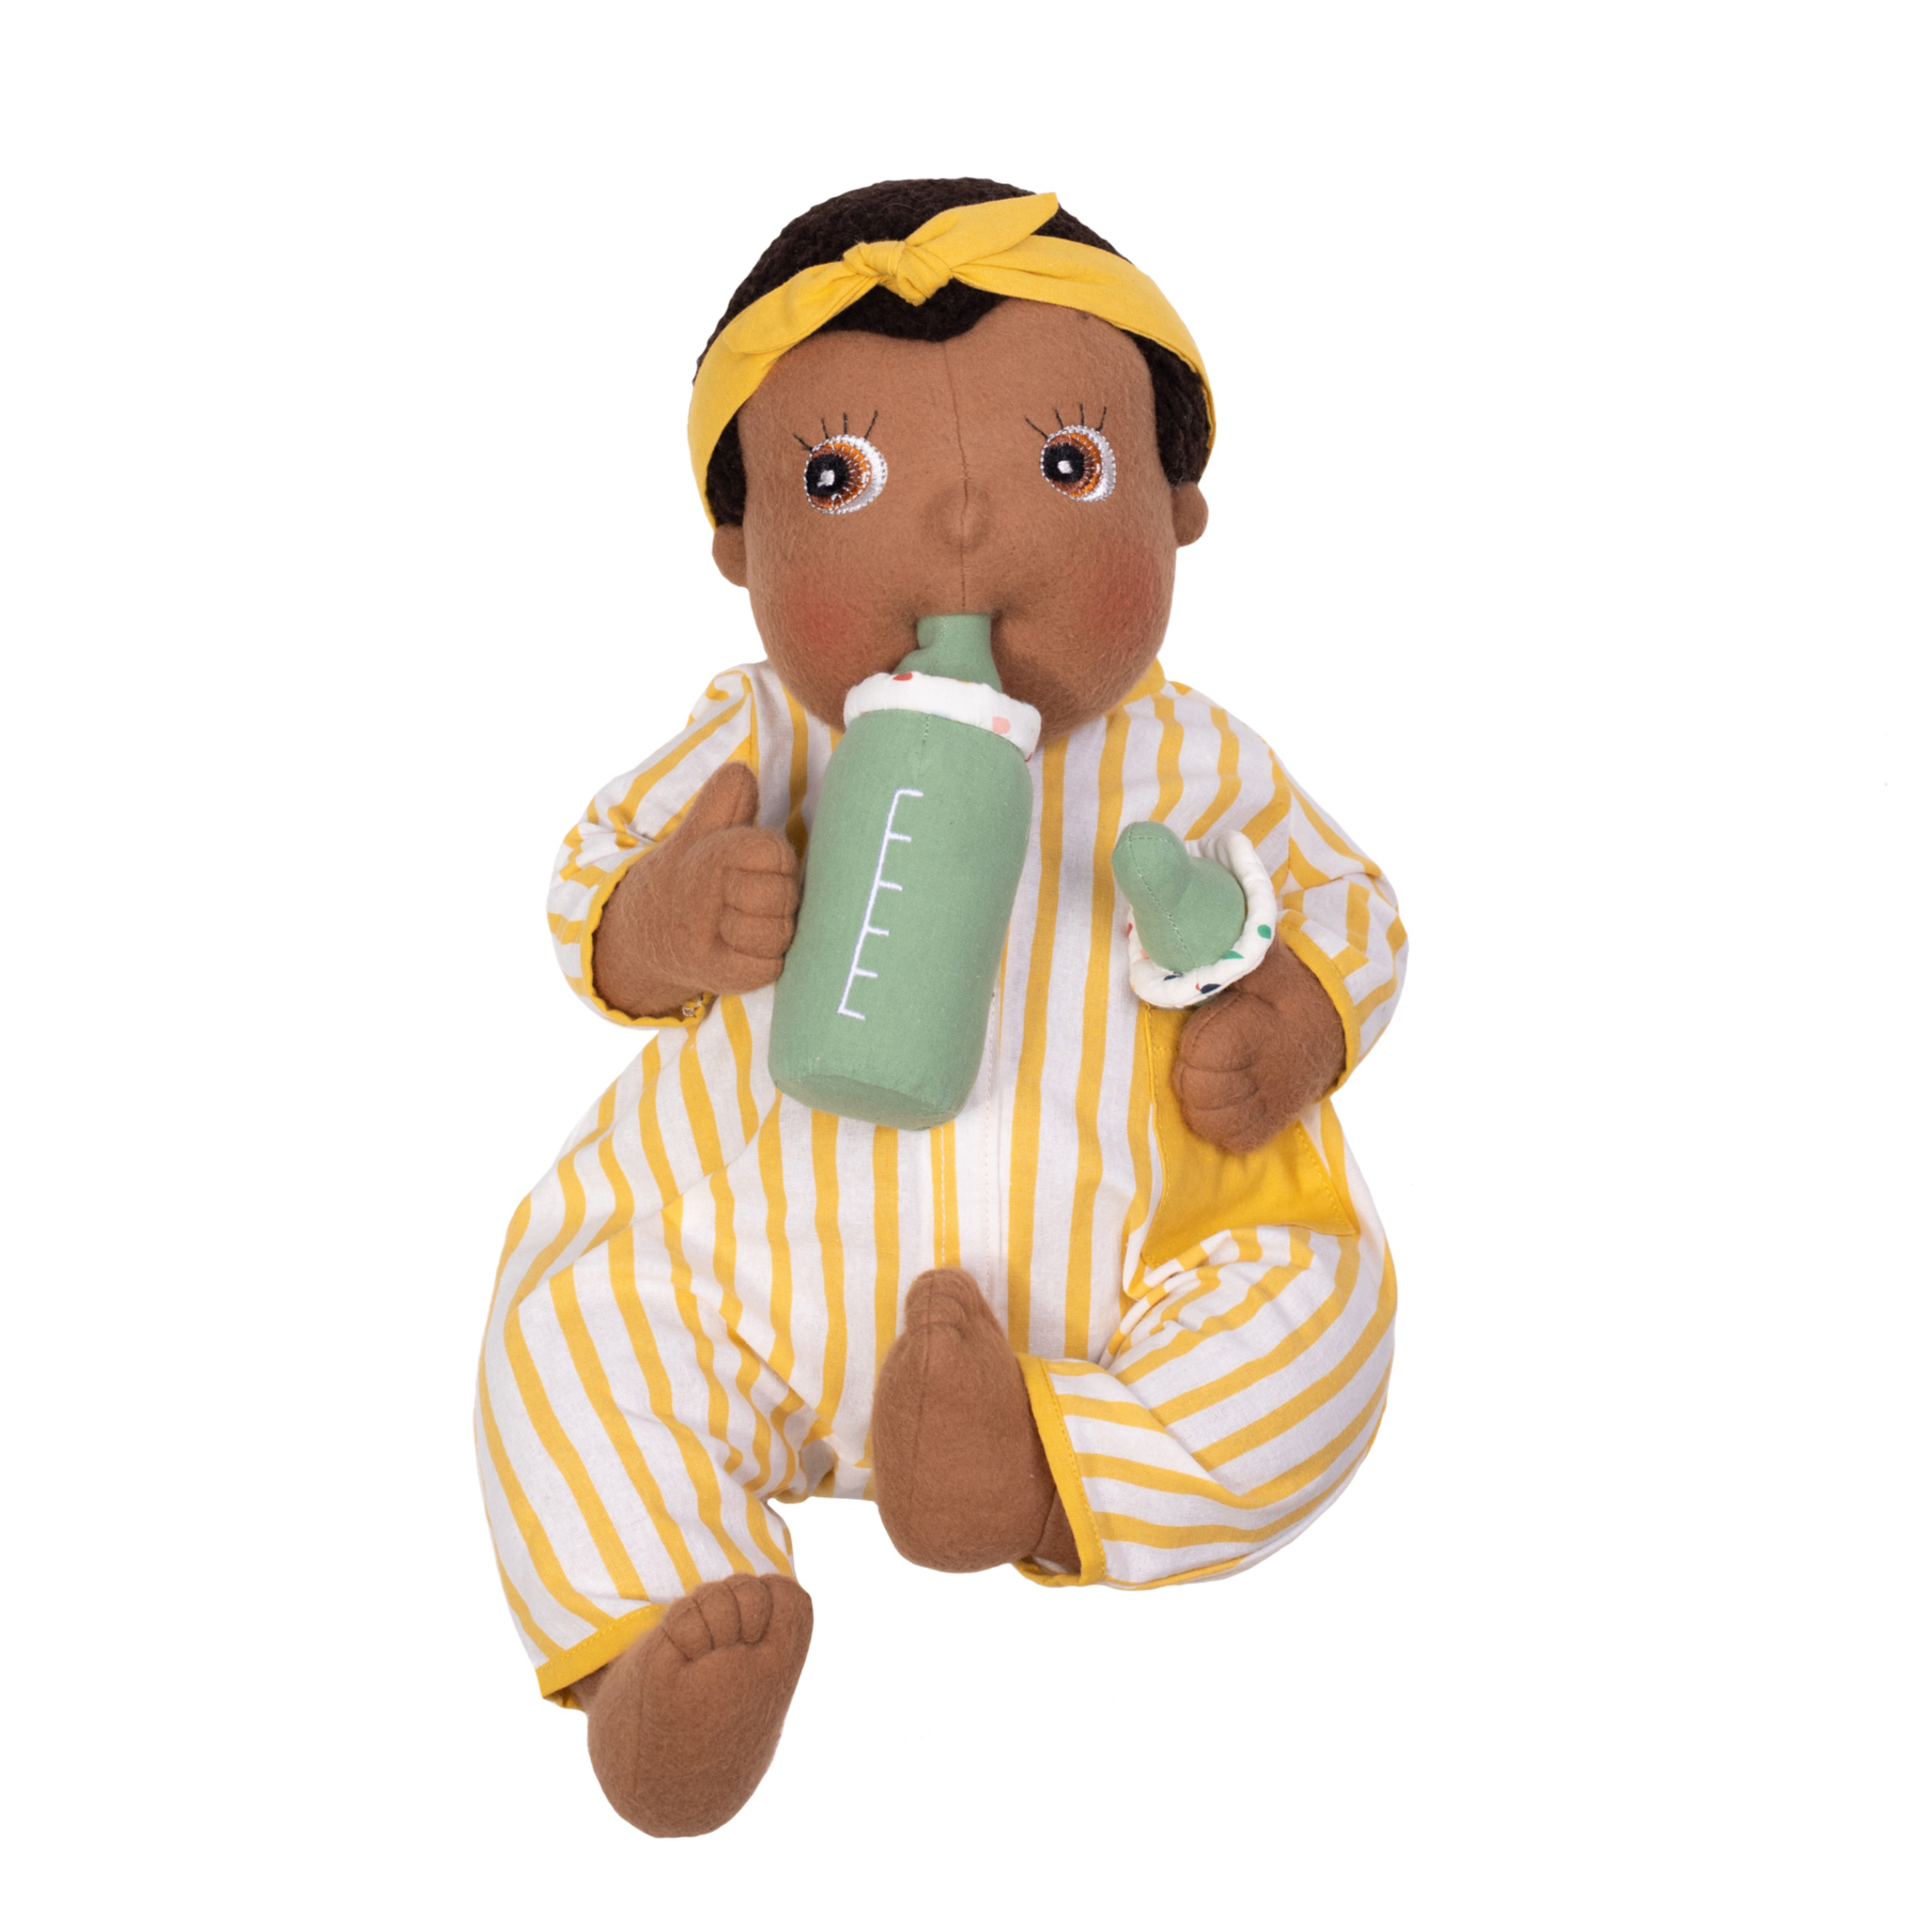 Rubens Barn rubens barn doll accessories bottle & pacifier baby